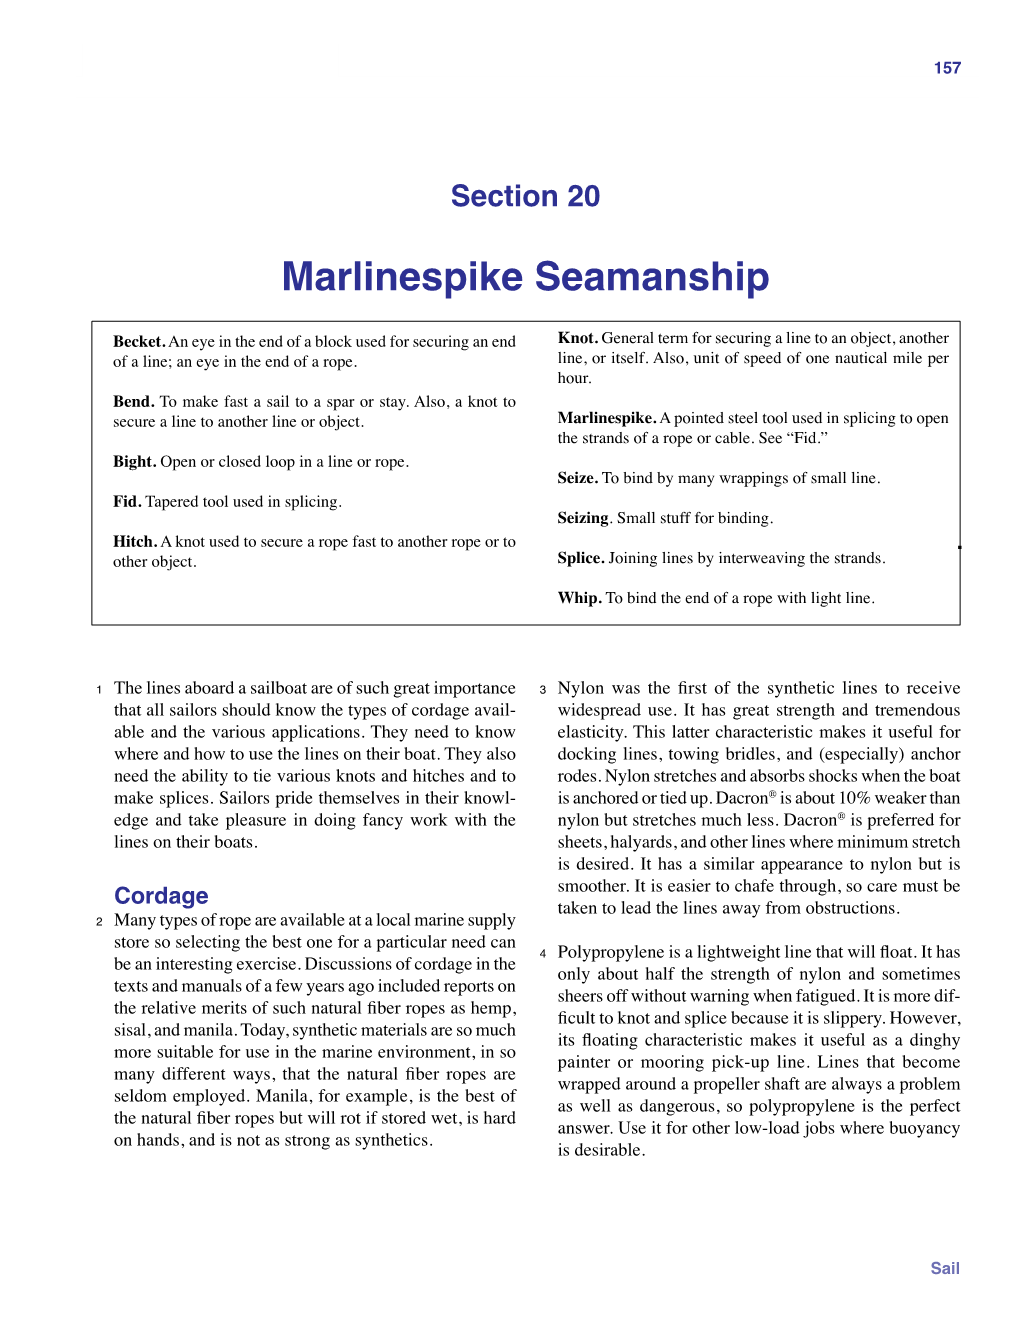 Marlinespike Seamanship 157